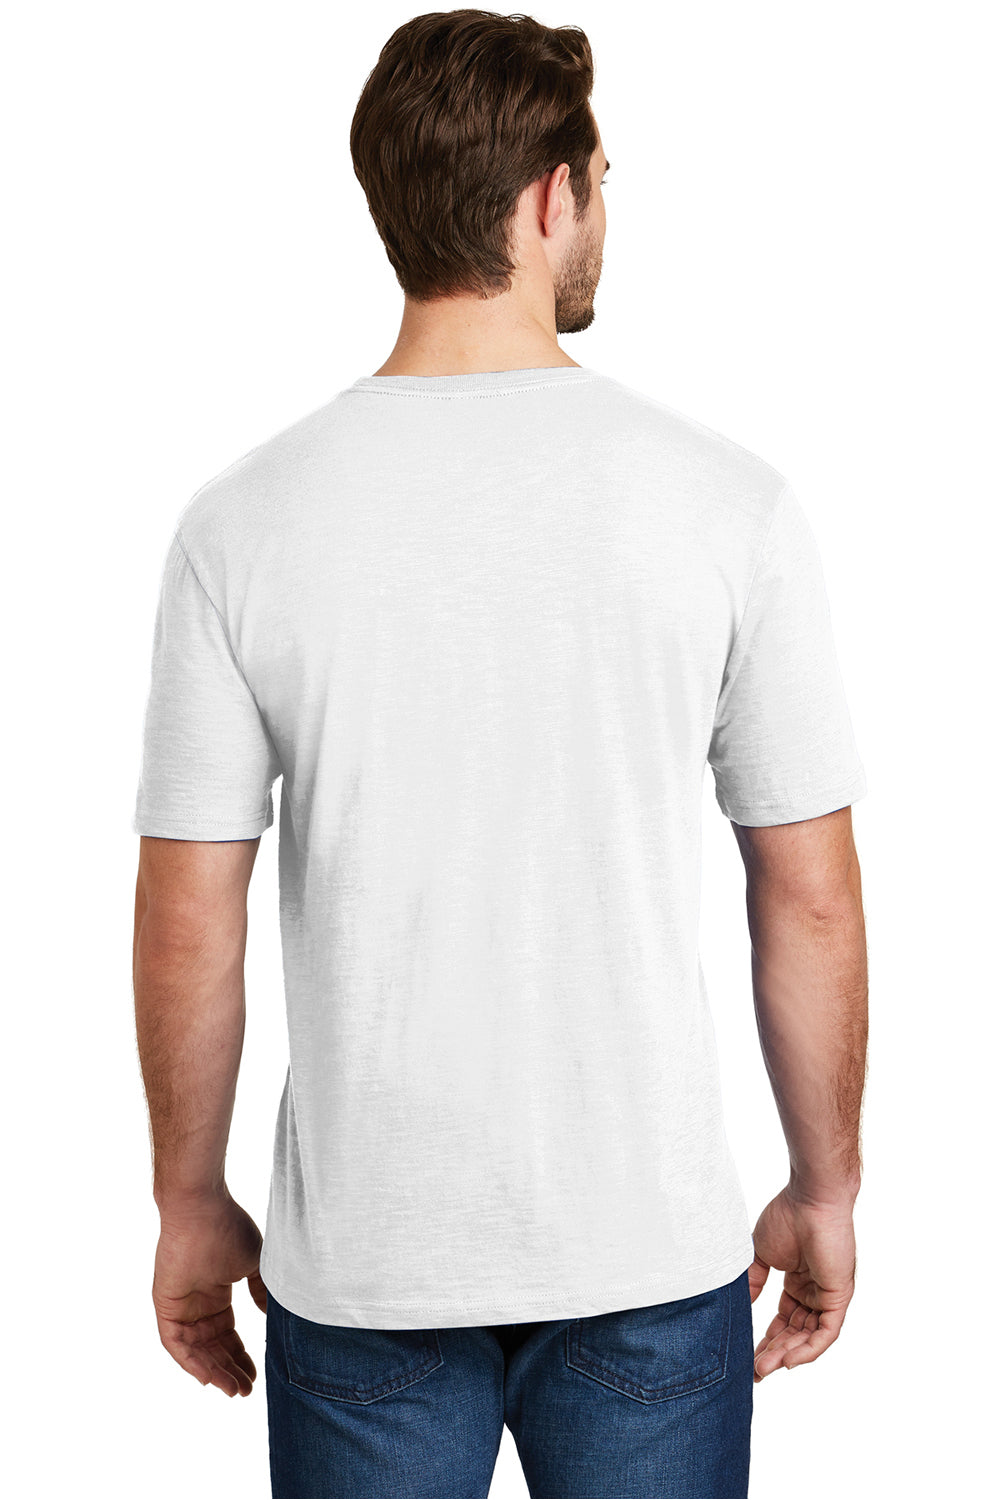 District DM3000 Mens Super Slub Short Sleeve Crewneck T-Shirt White Back